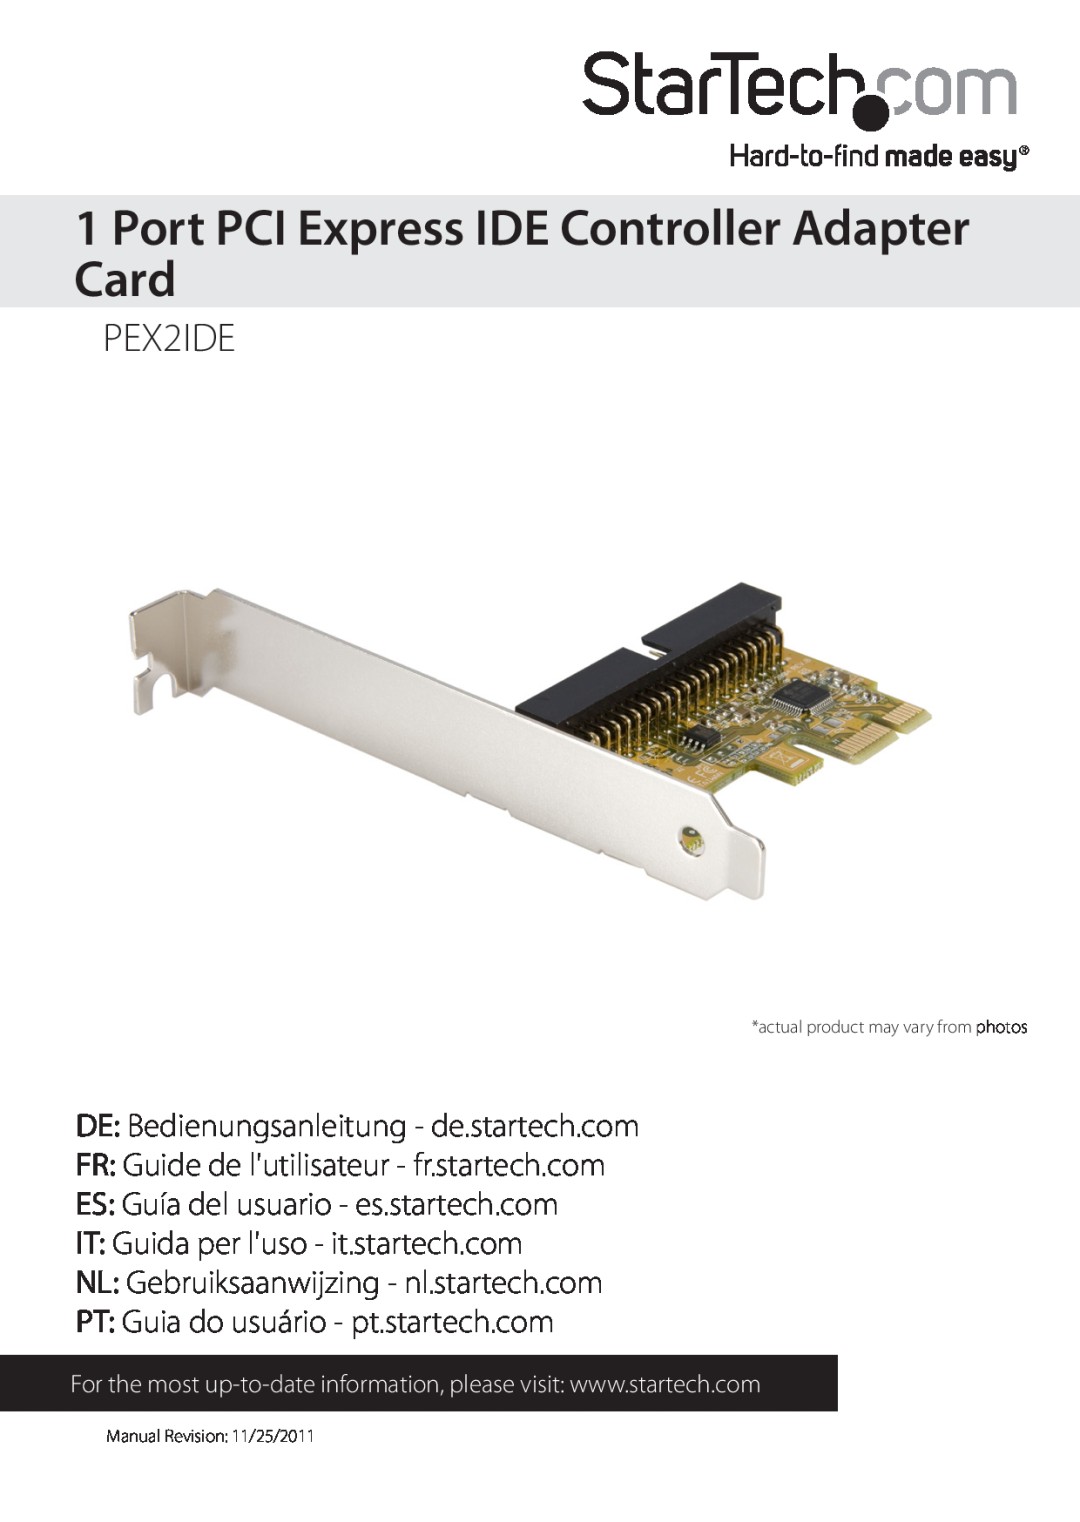 StarTech.com 1 port pci express ide controller adapter card manual Port PCI Express IDE Controller Adapter Card, PEX2IDE 